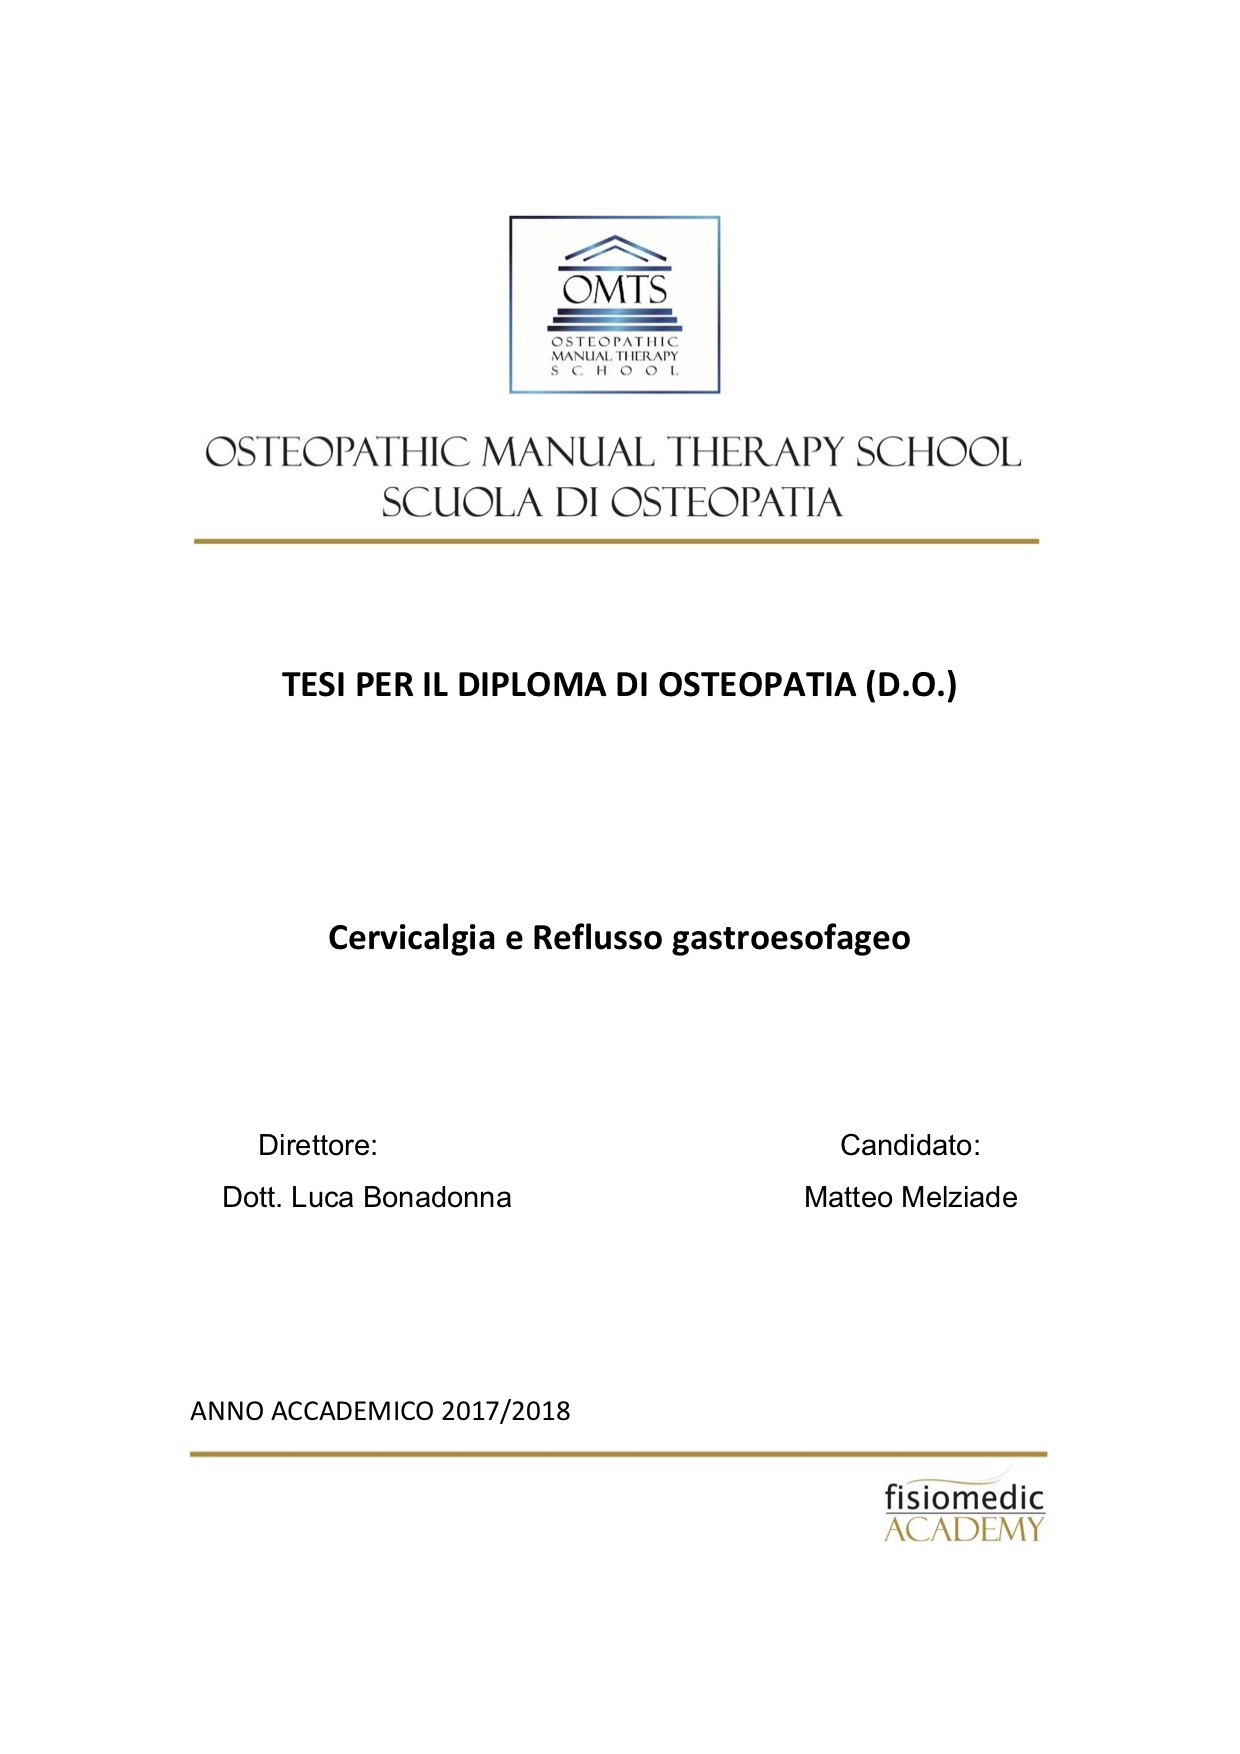 Matteo Melziade Tesi Diploma Osteopatia 2018